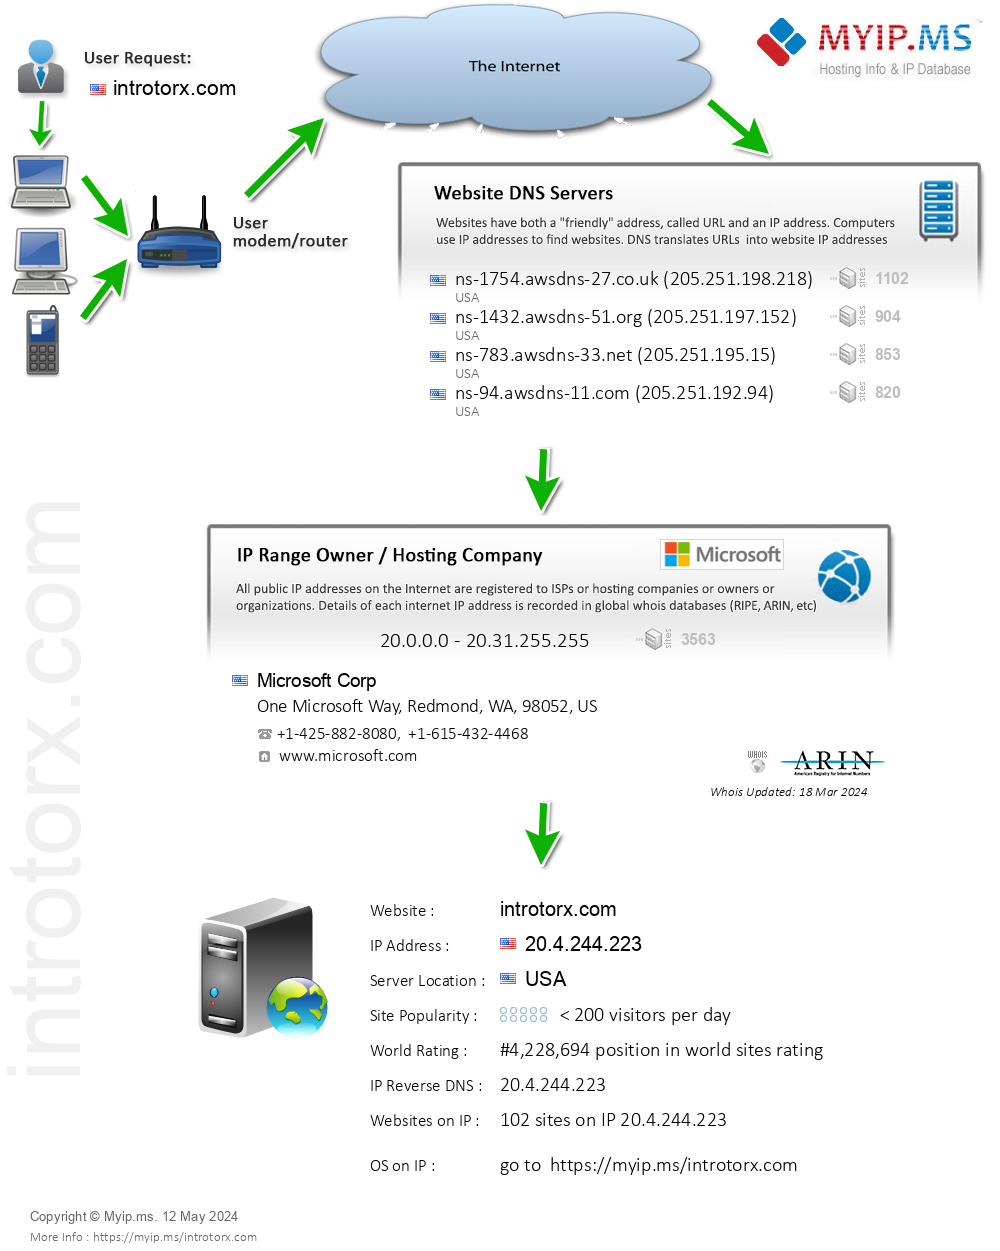 Introtorx.com - Website Hosting Visual IP Diagram